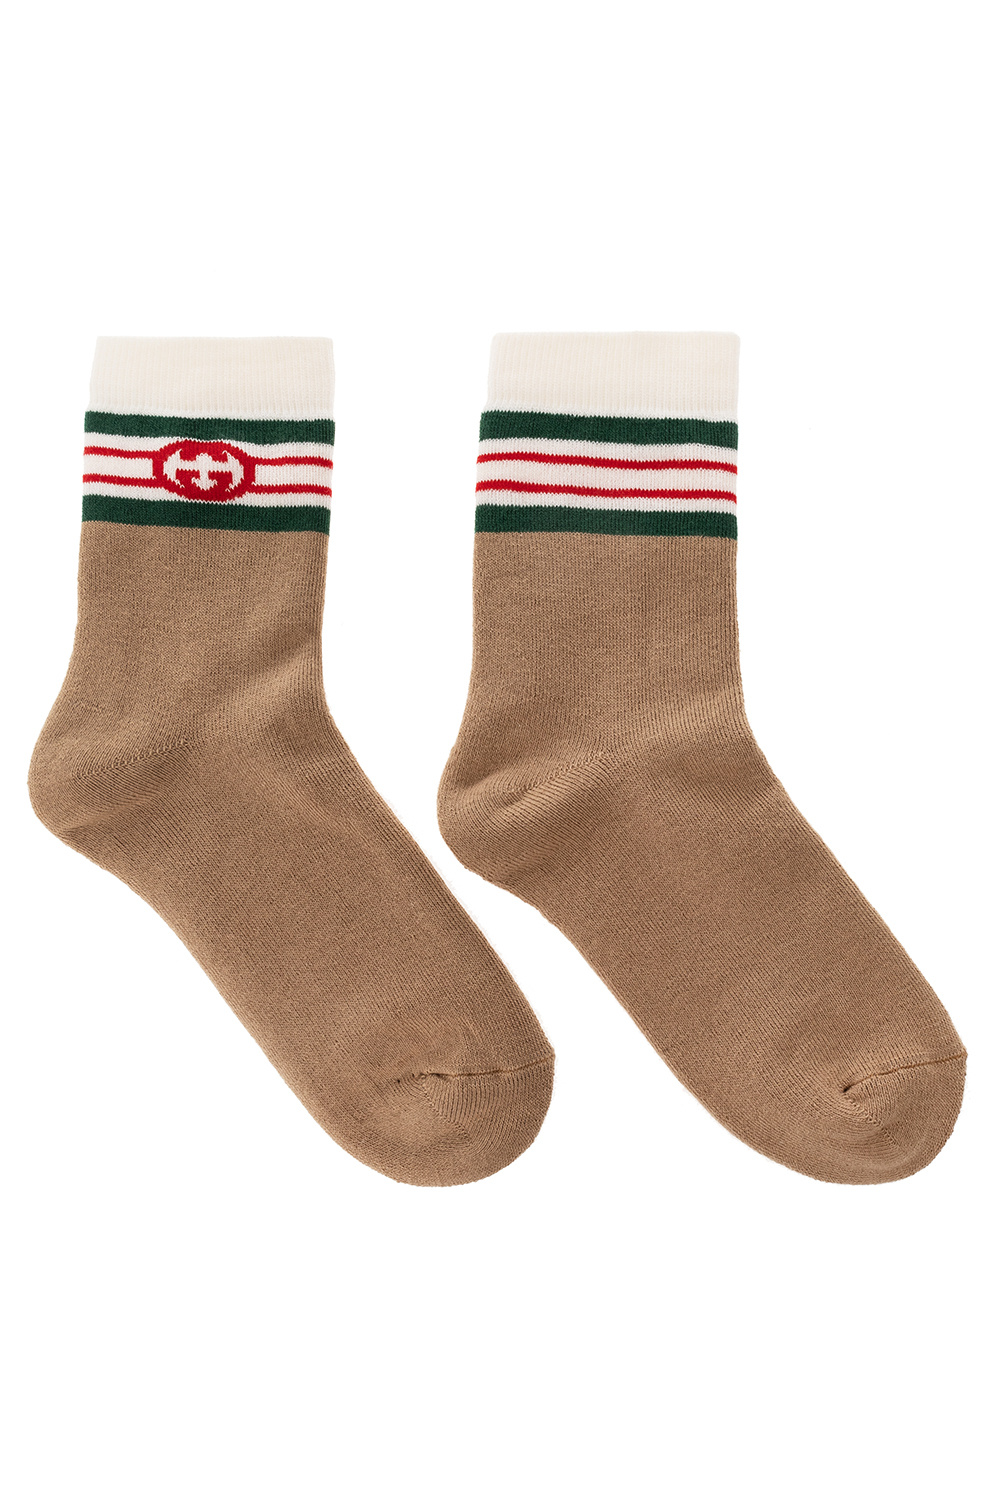 gucci handle Kids Cotton socks